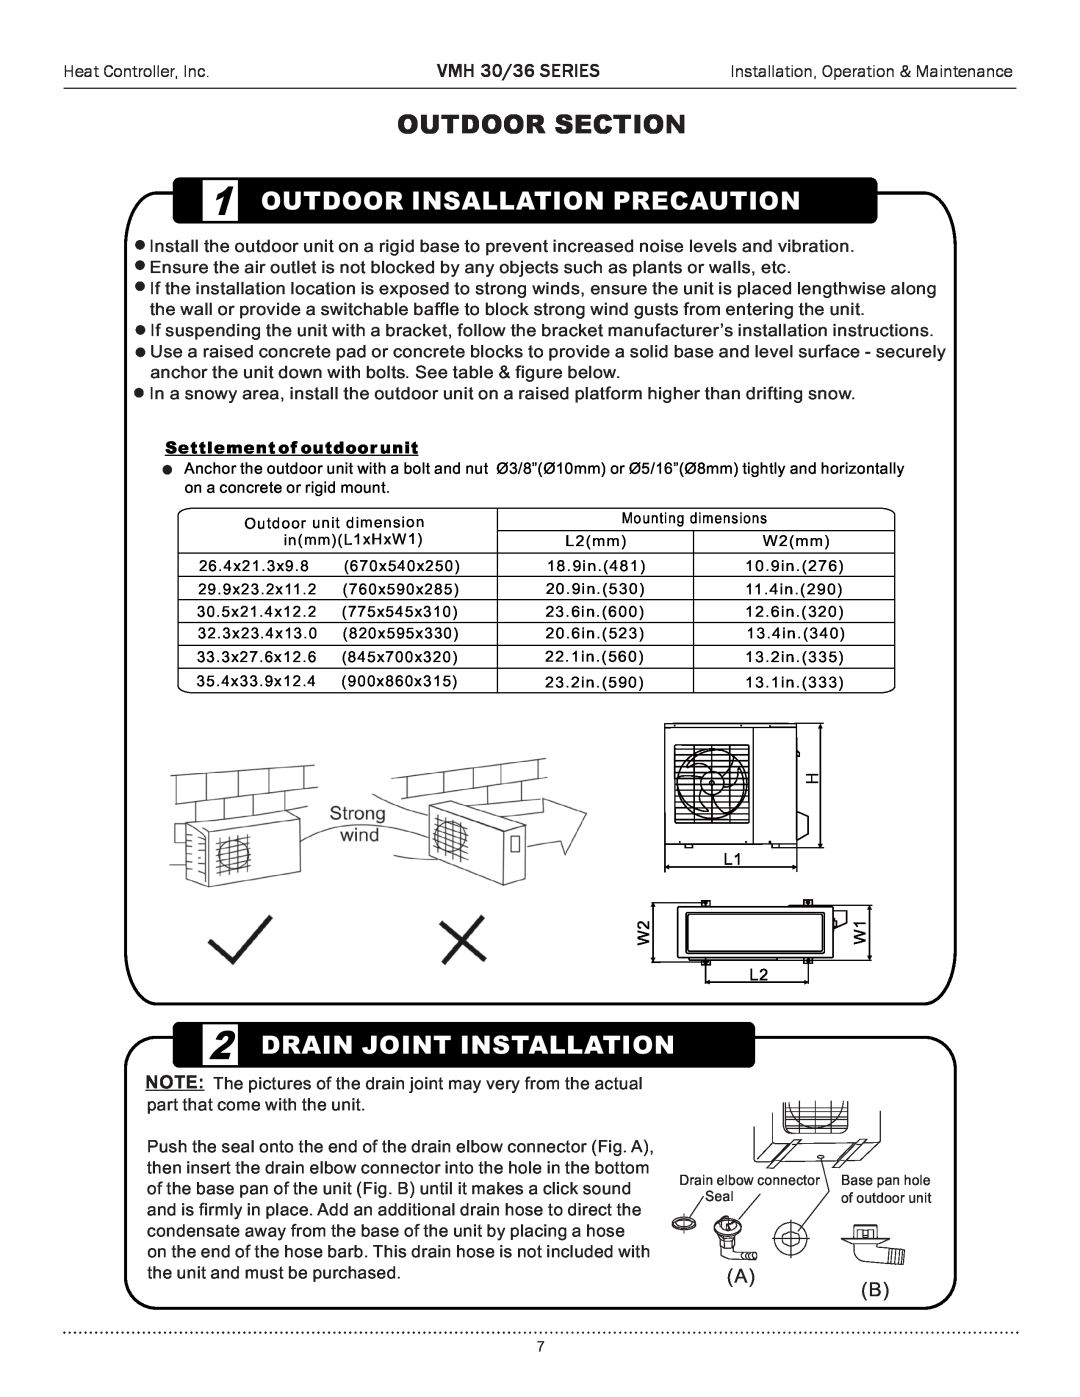 Heat Controller manual Outdoor Section, 1OUTDOOR INSALLATION PRECAUTION, 2DRAIN JOINT INSTALLATION, VMH 30/36 SERIES 